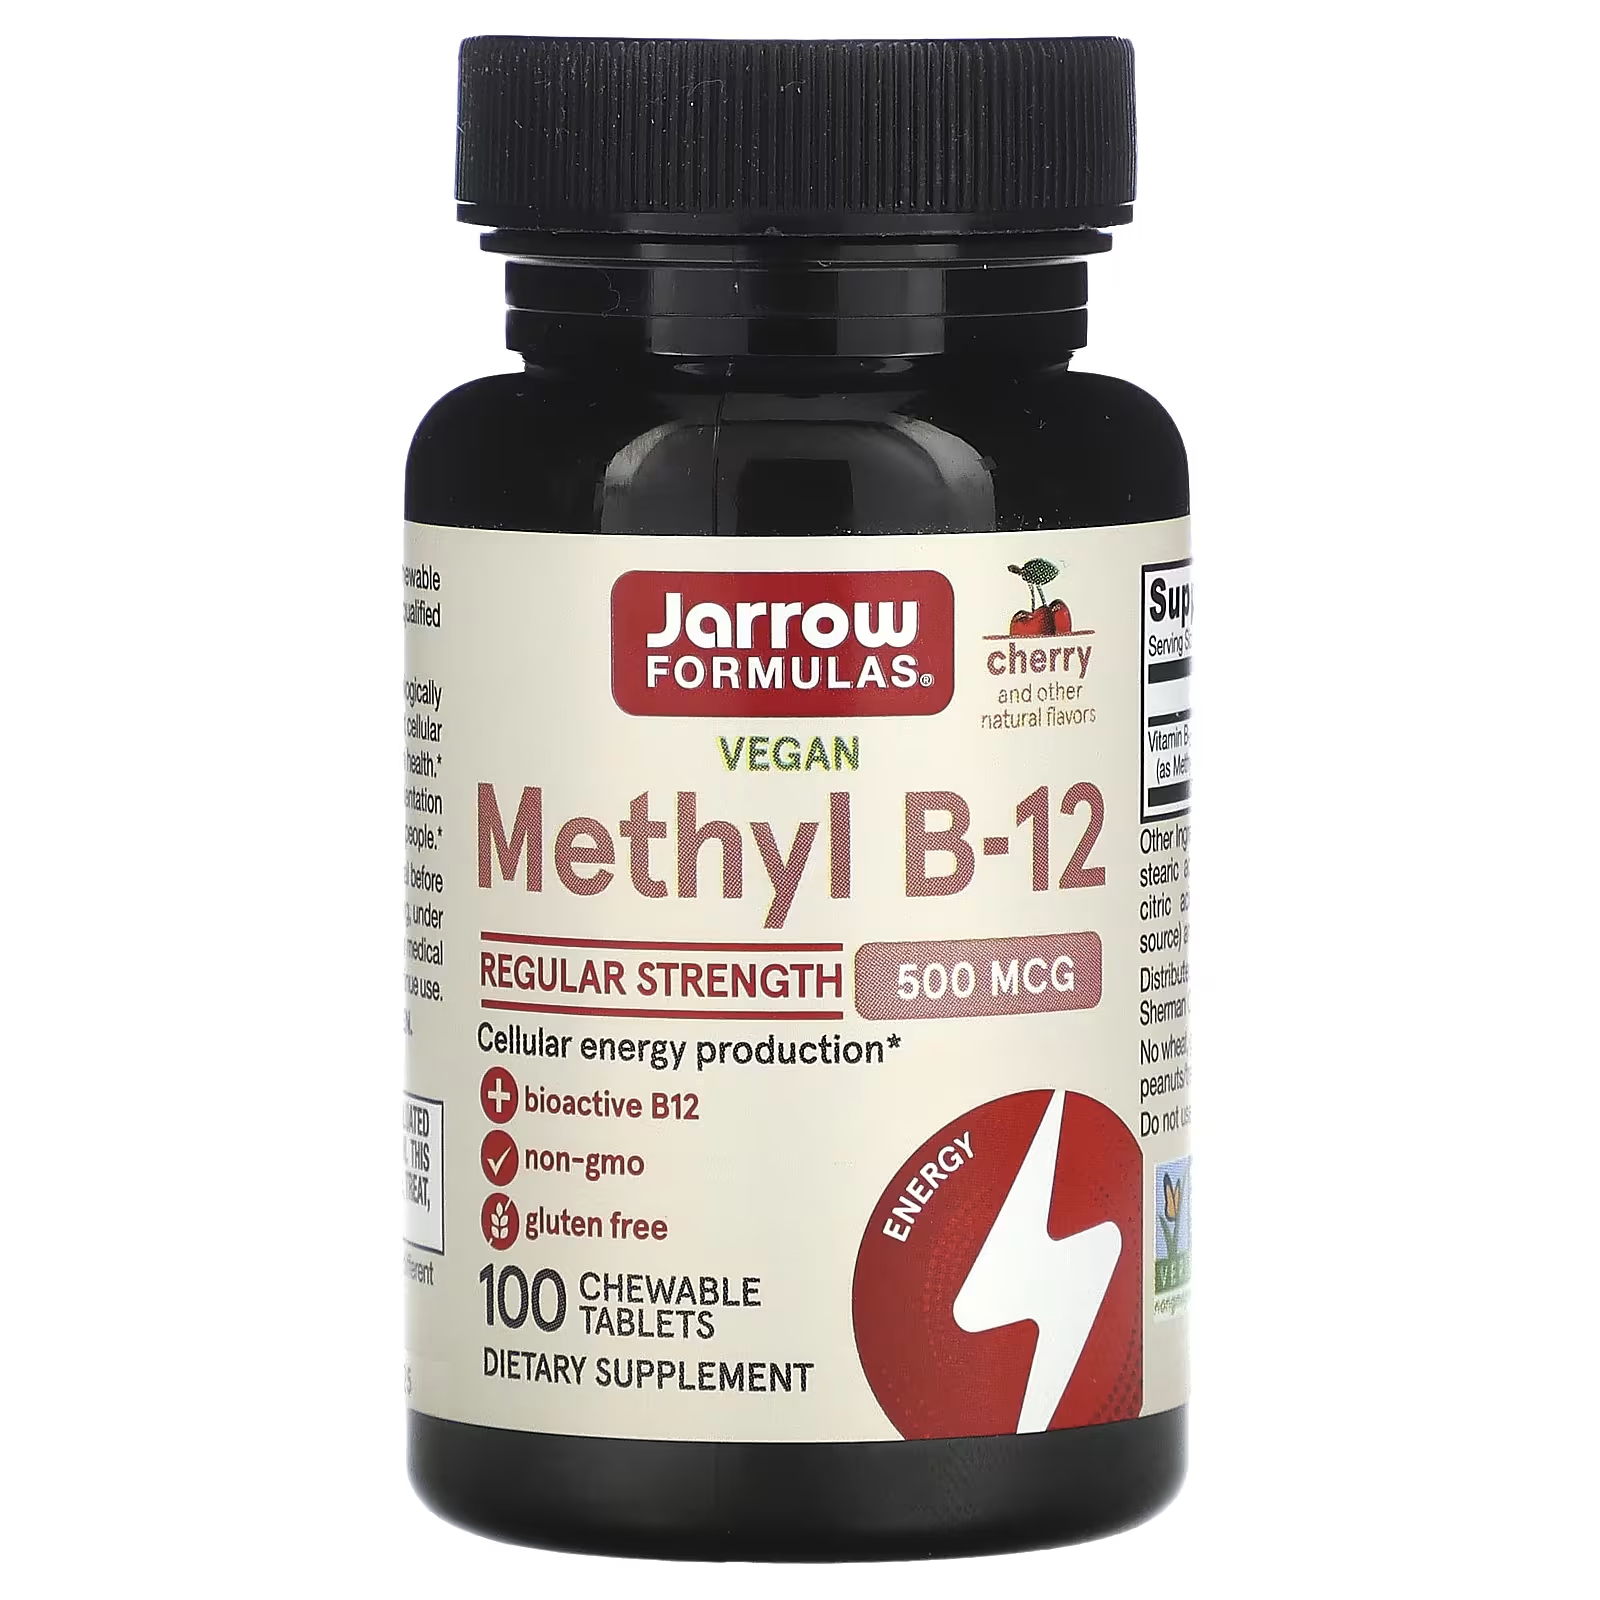 Метил B-12 Jarrow Formulas вишня, 100 жевательных таблеток